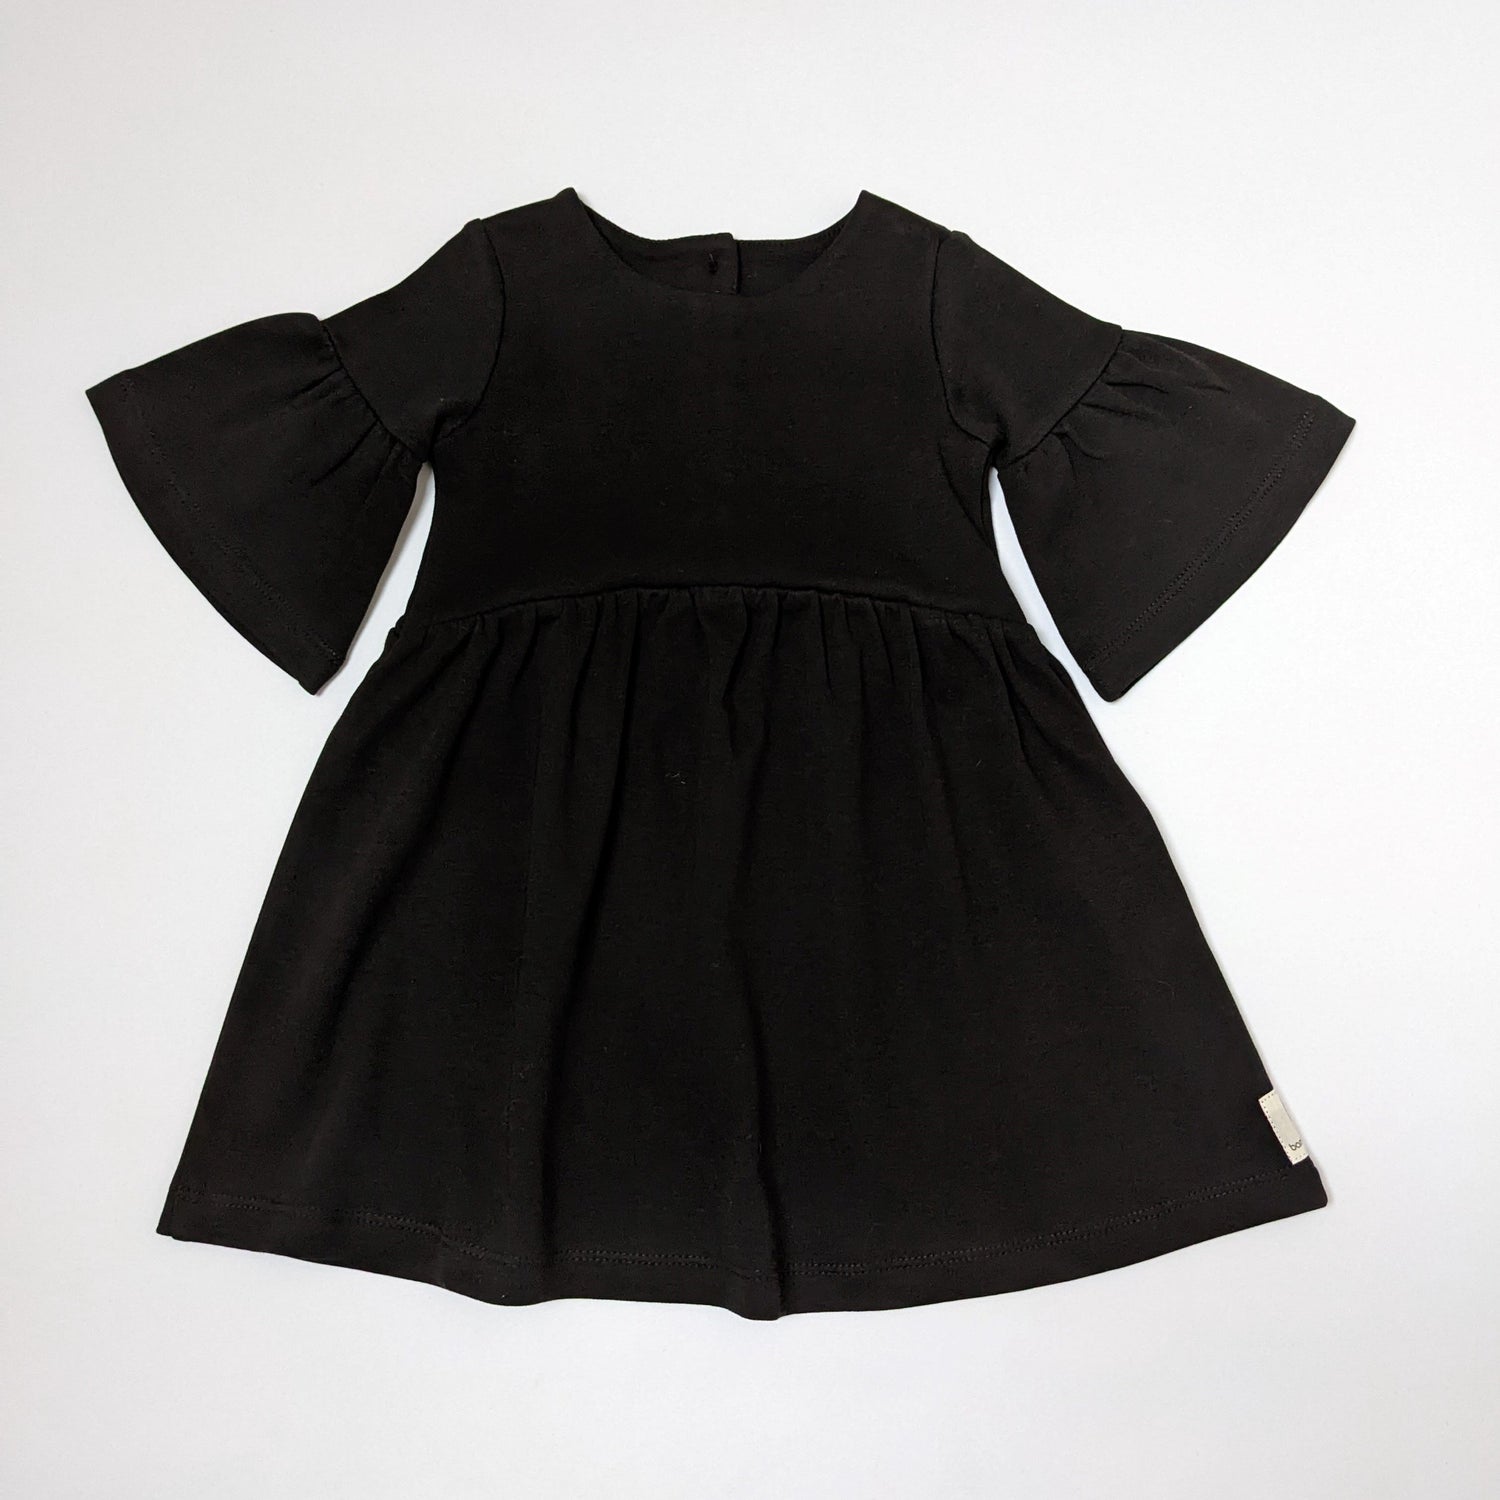 Black willow baby dress